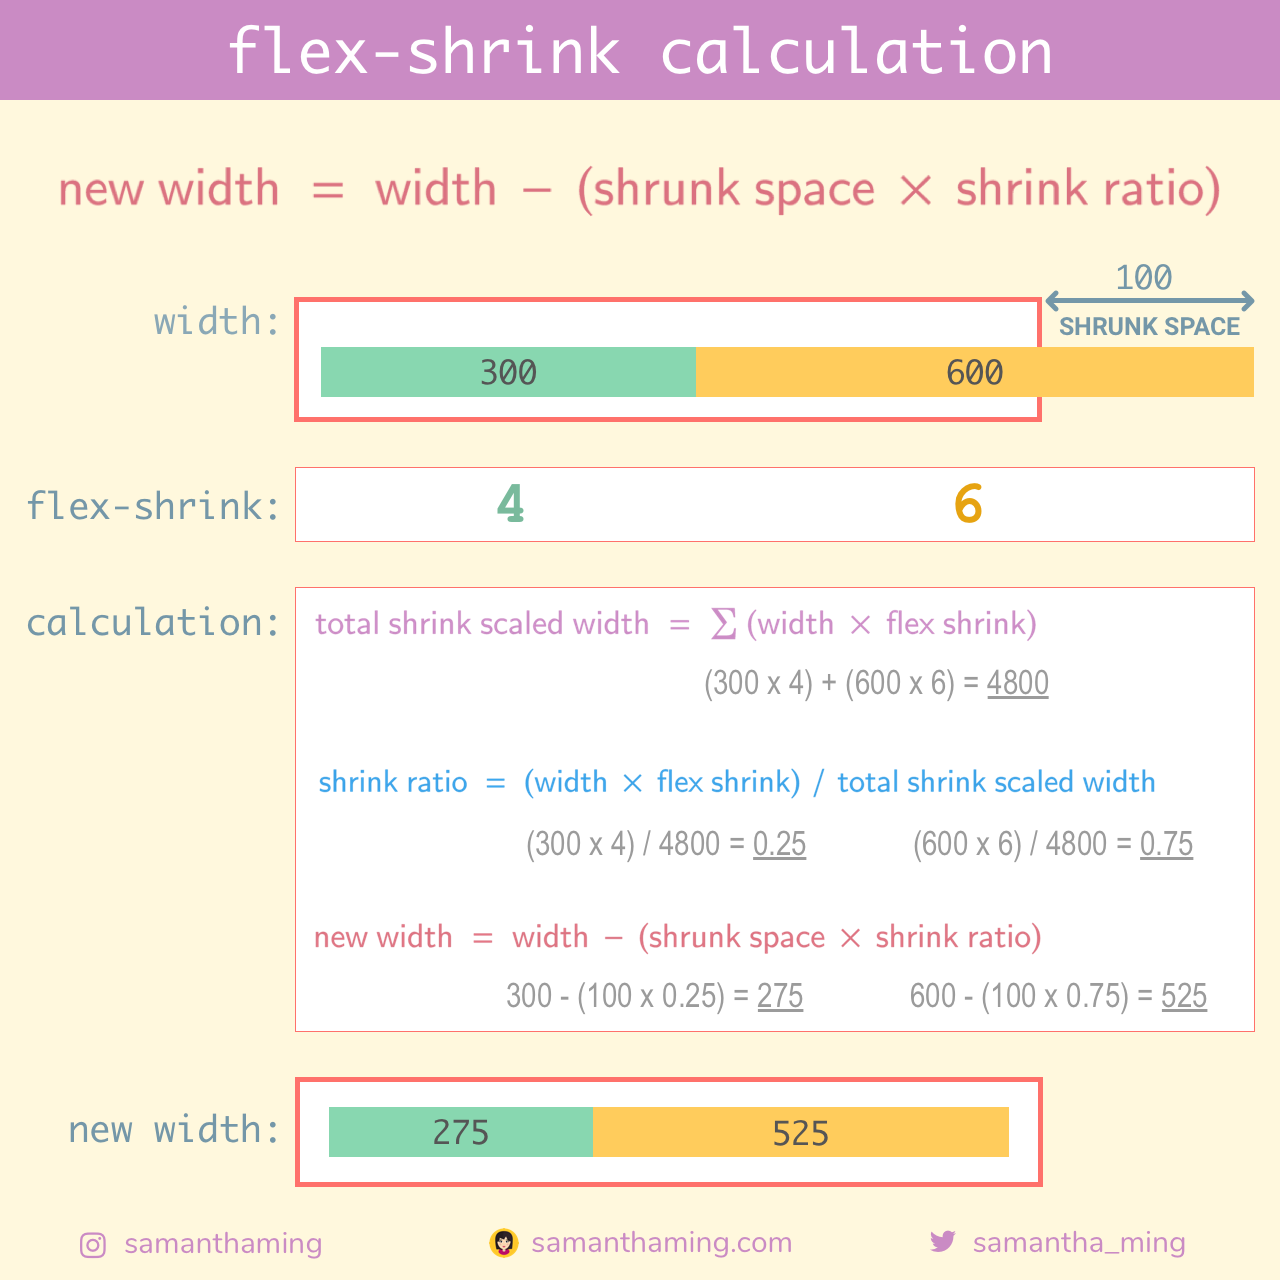 flex-shrink calculation